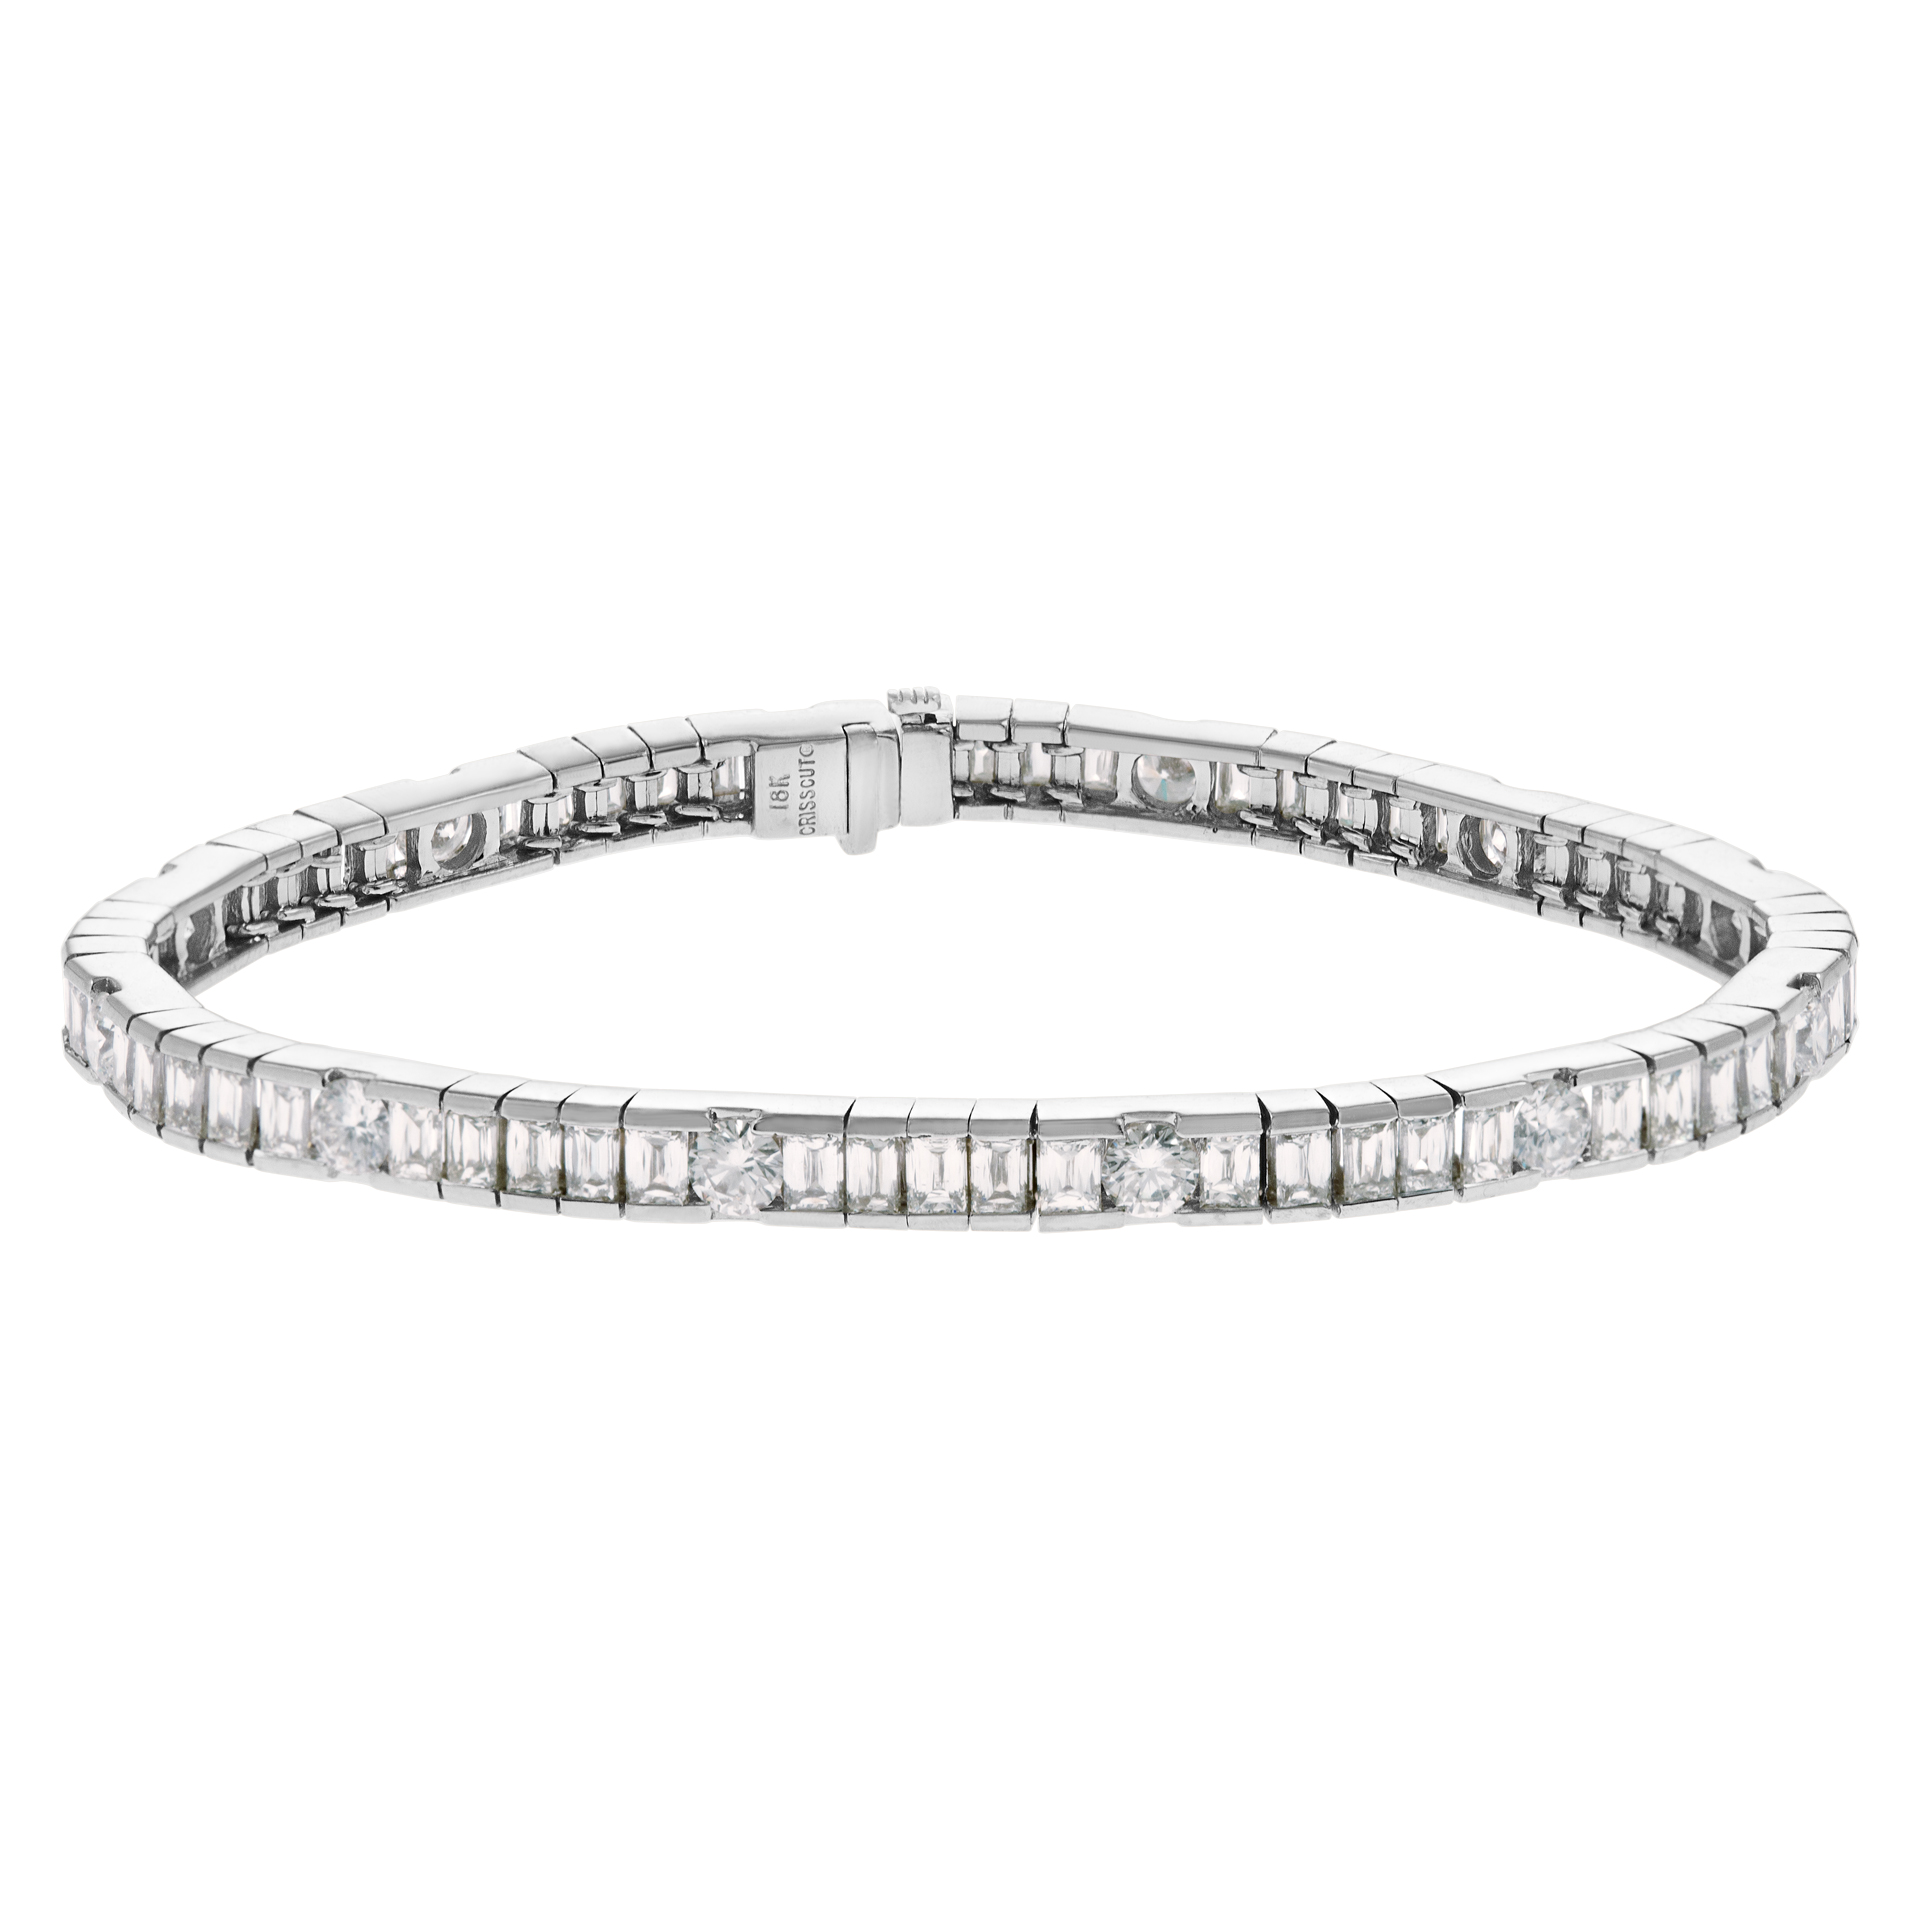 Diamond bracelet with over 8 carats in diamonds set in 18k white gold image 1